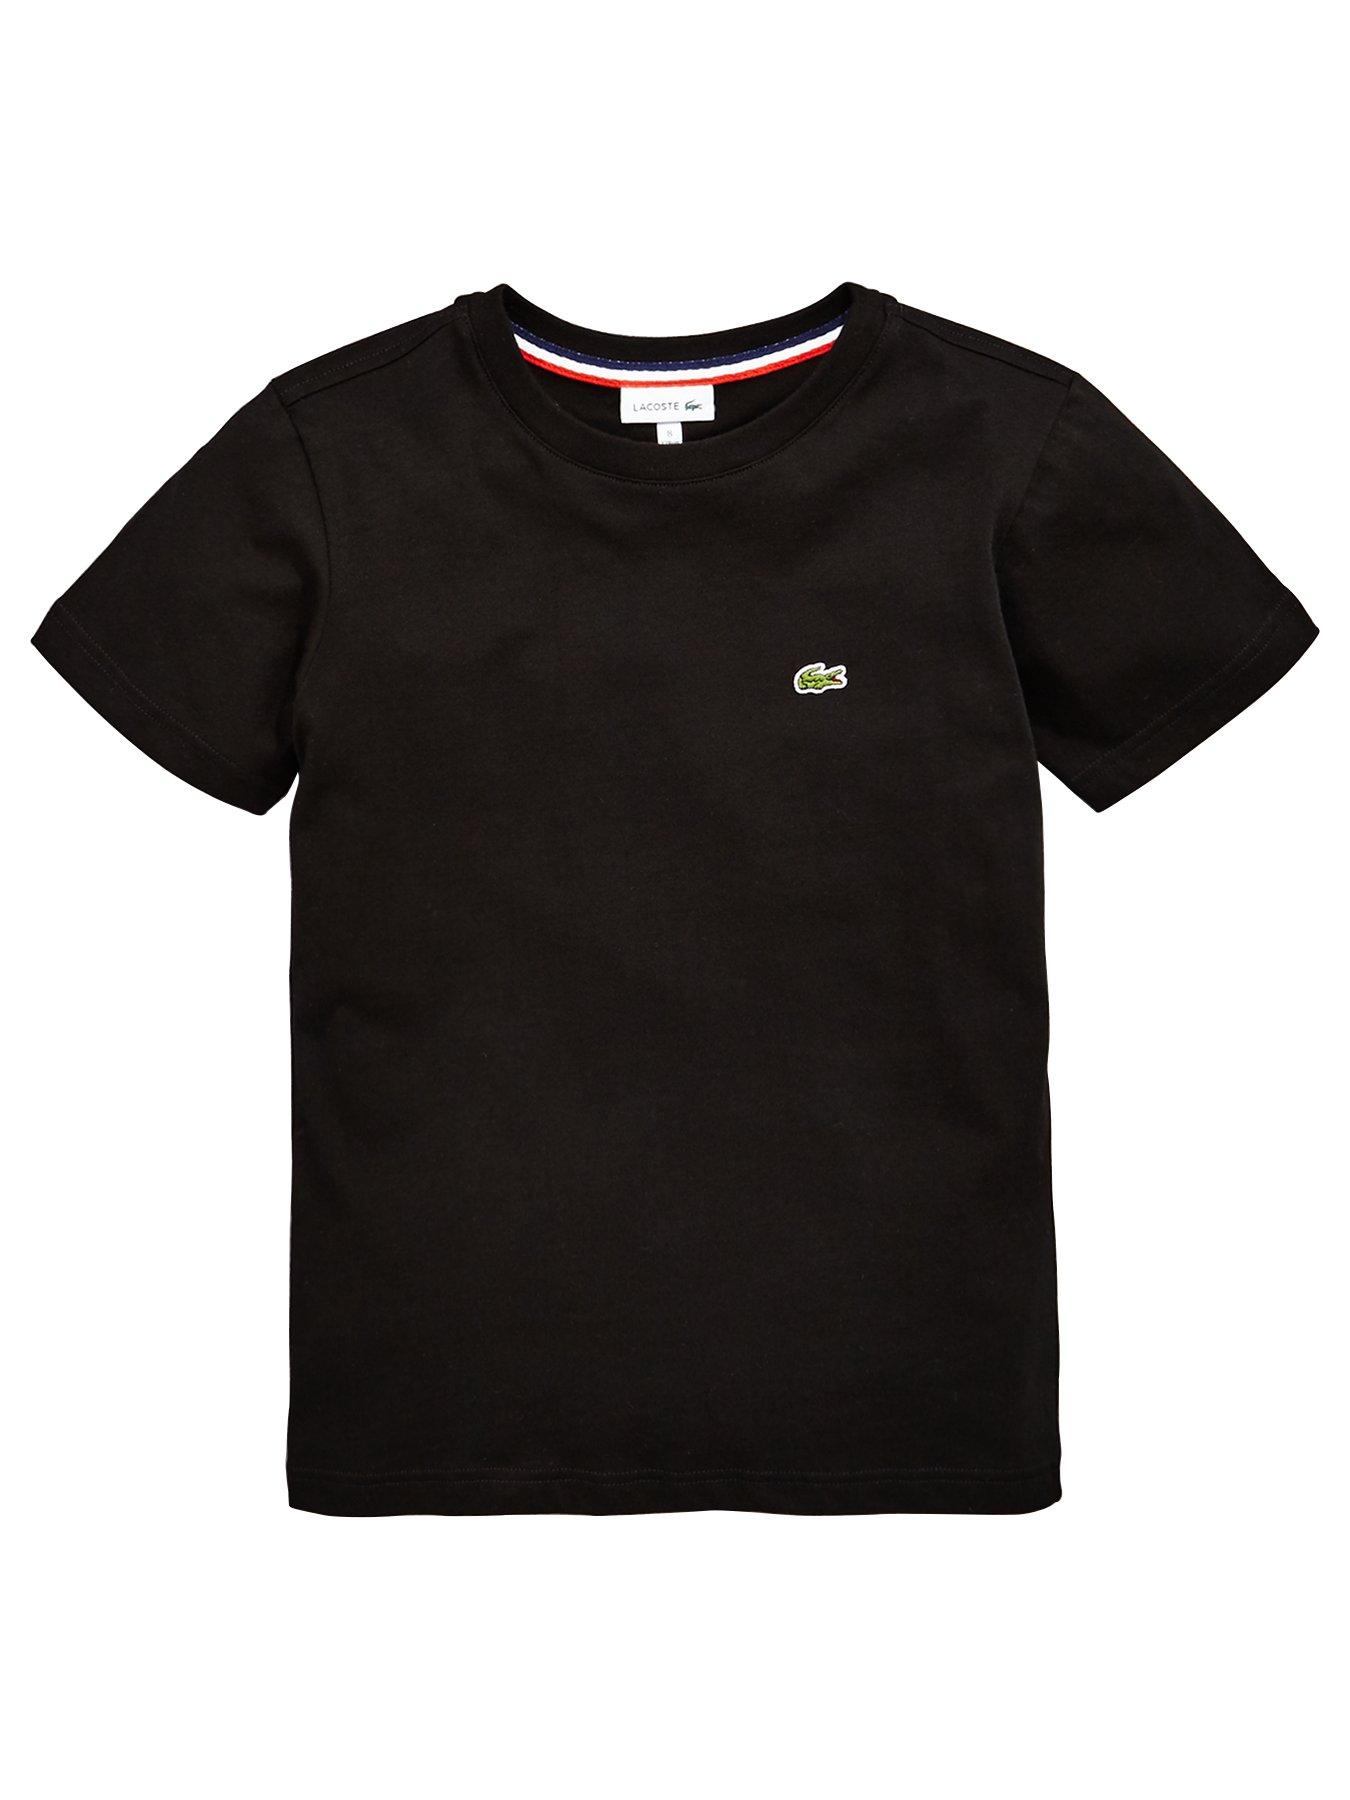 Boys, Lacoste Short Sleeve T-shirt, Black, Size 12 Years